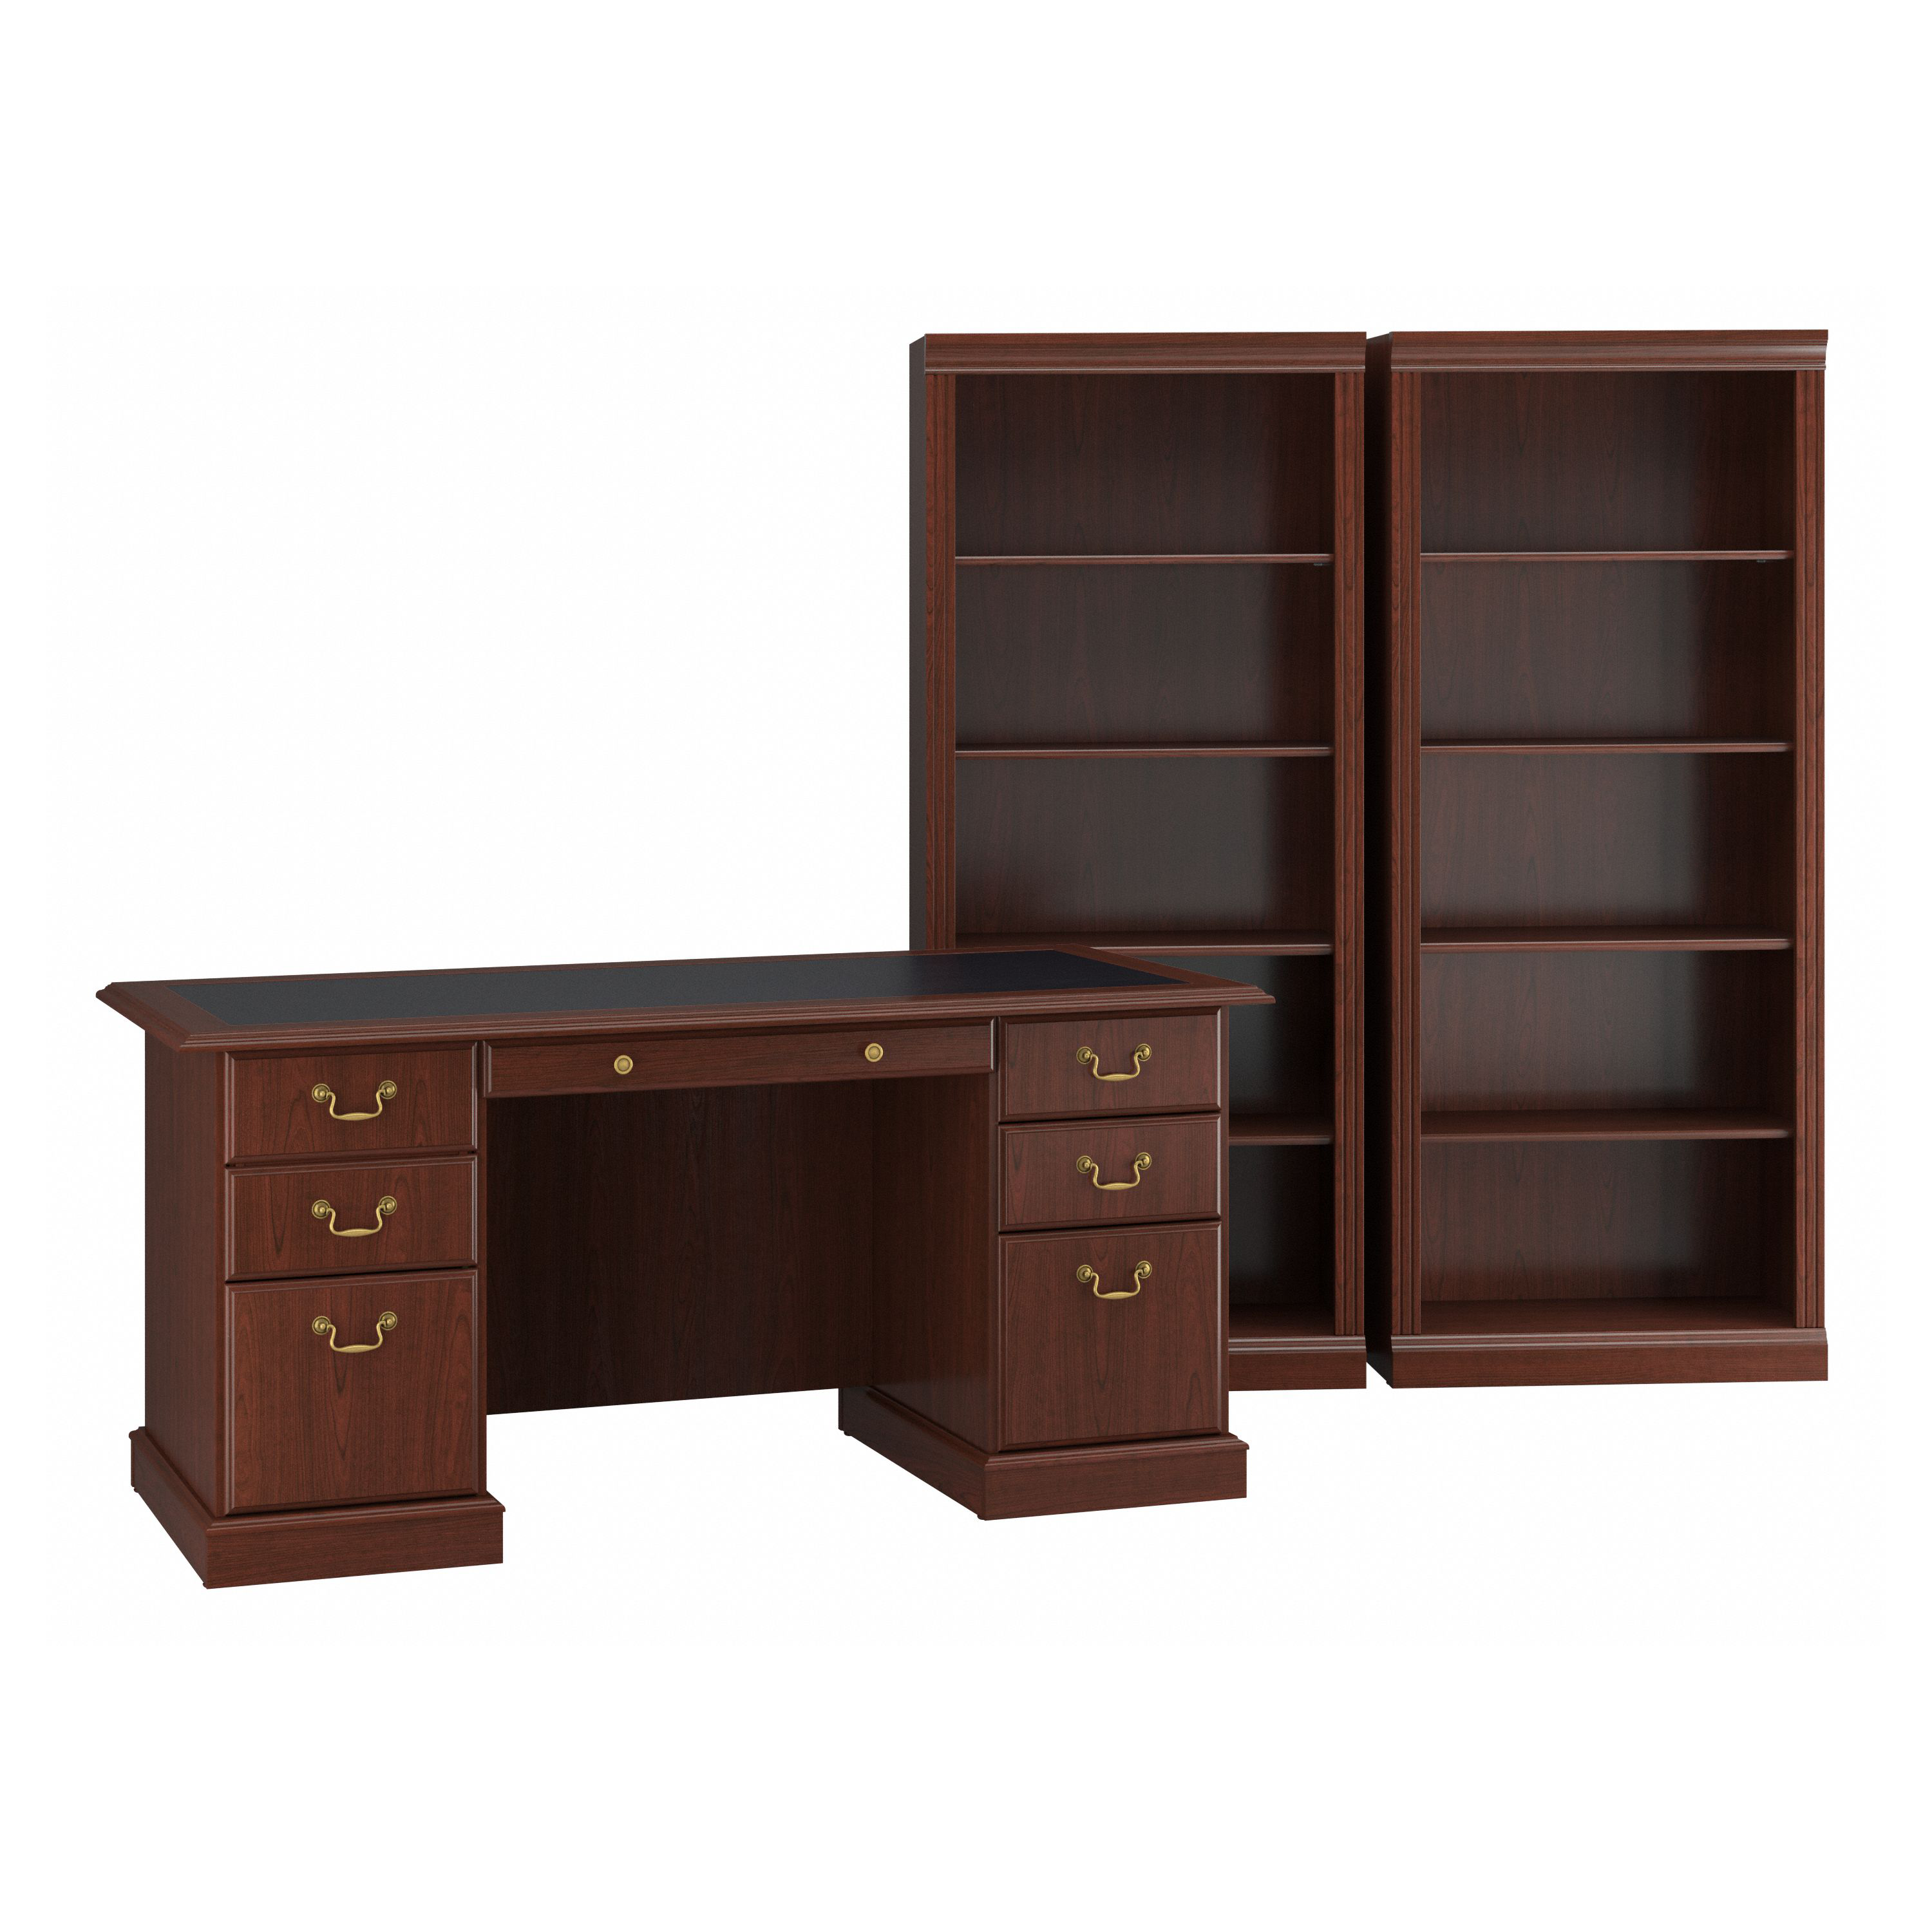 Shop Bush Furniture Saratoga Executive Desk and Bookcase Set 02 SAR003CS #color_harvest cherry